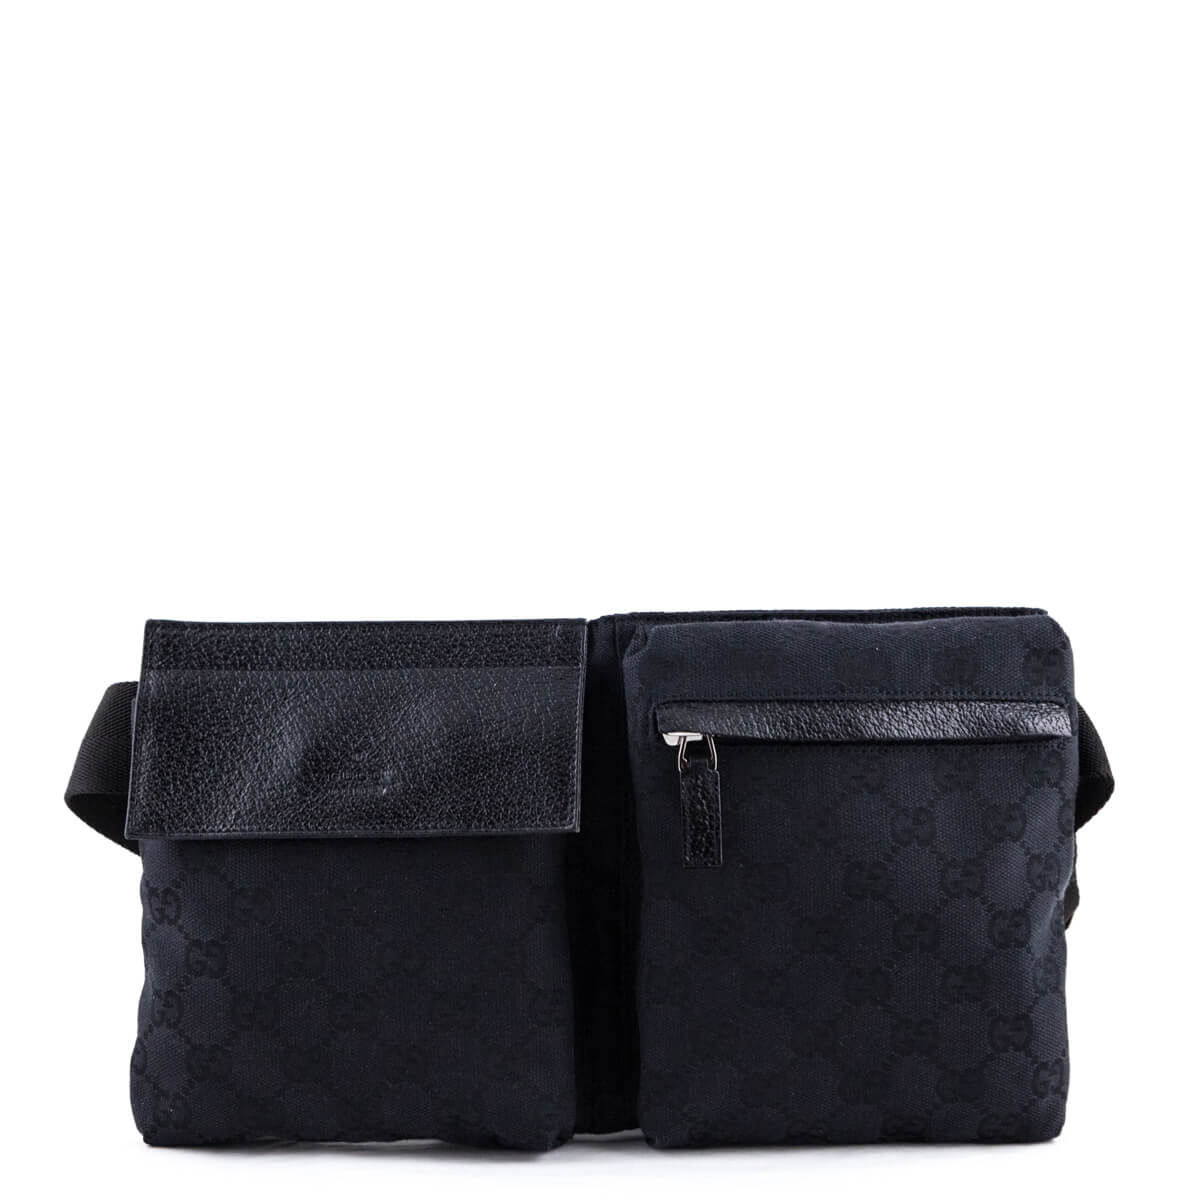 Gucci Black GG Monogram Canvas Waist Bag - Preowned Gucci Handbags